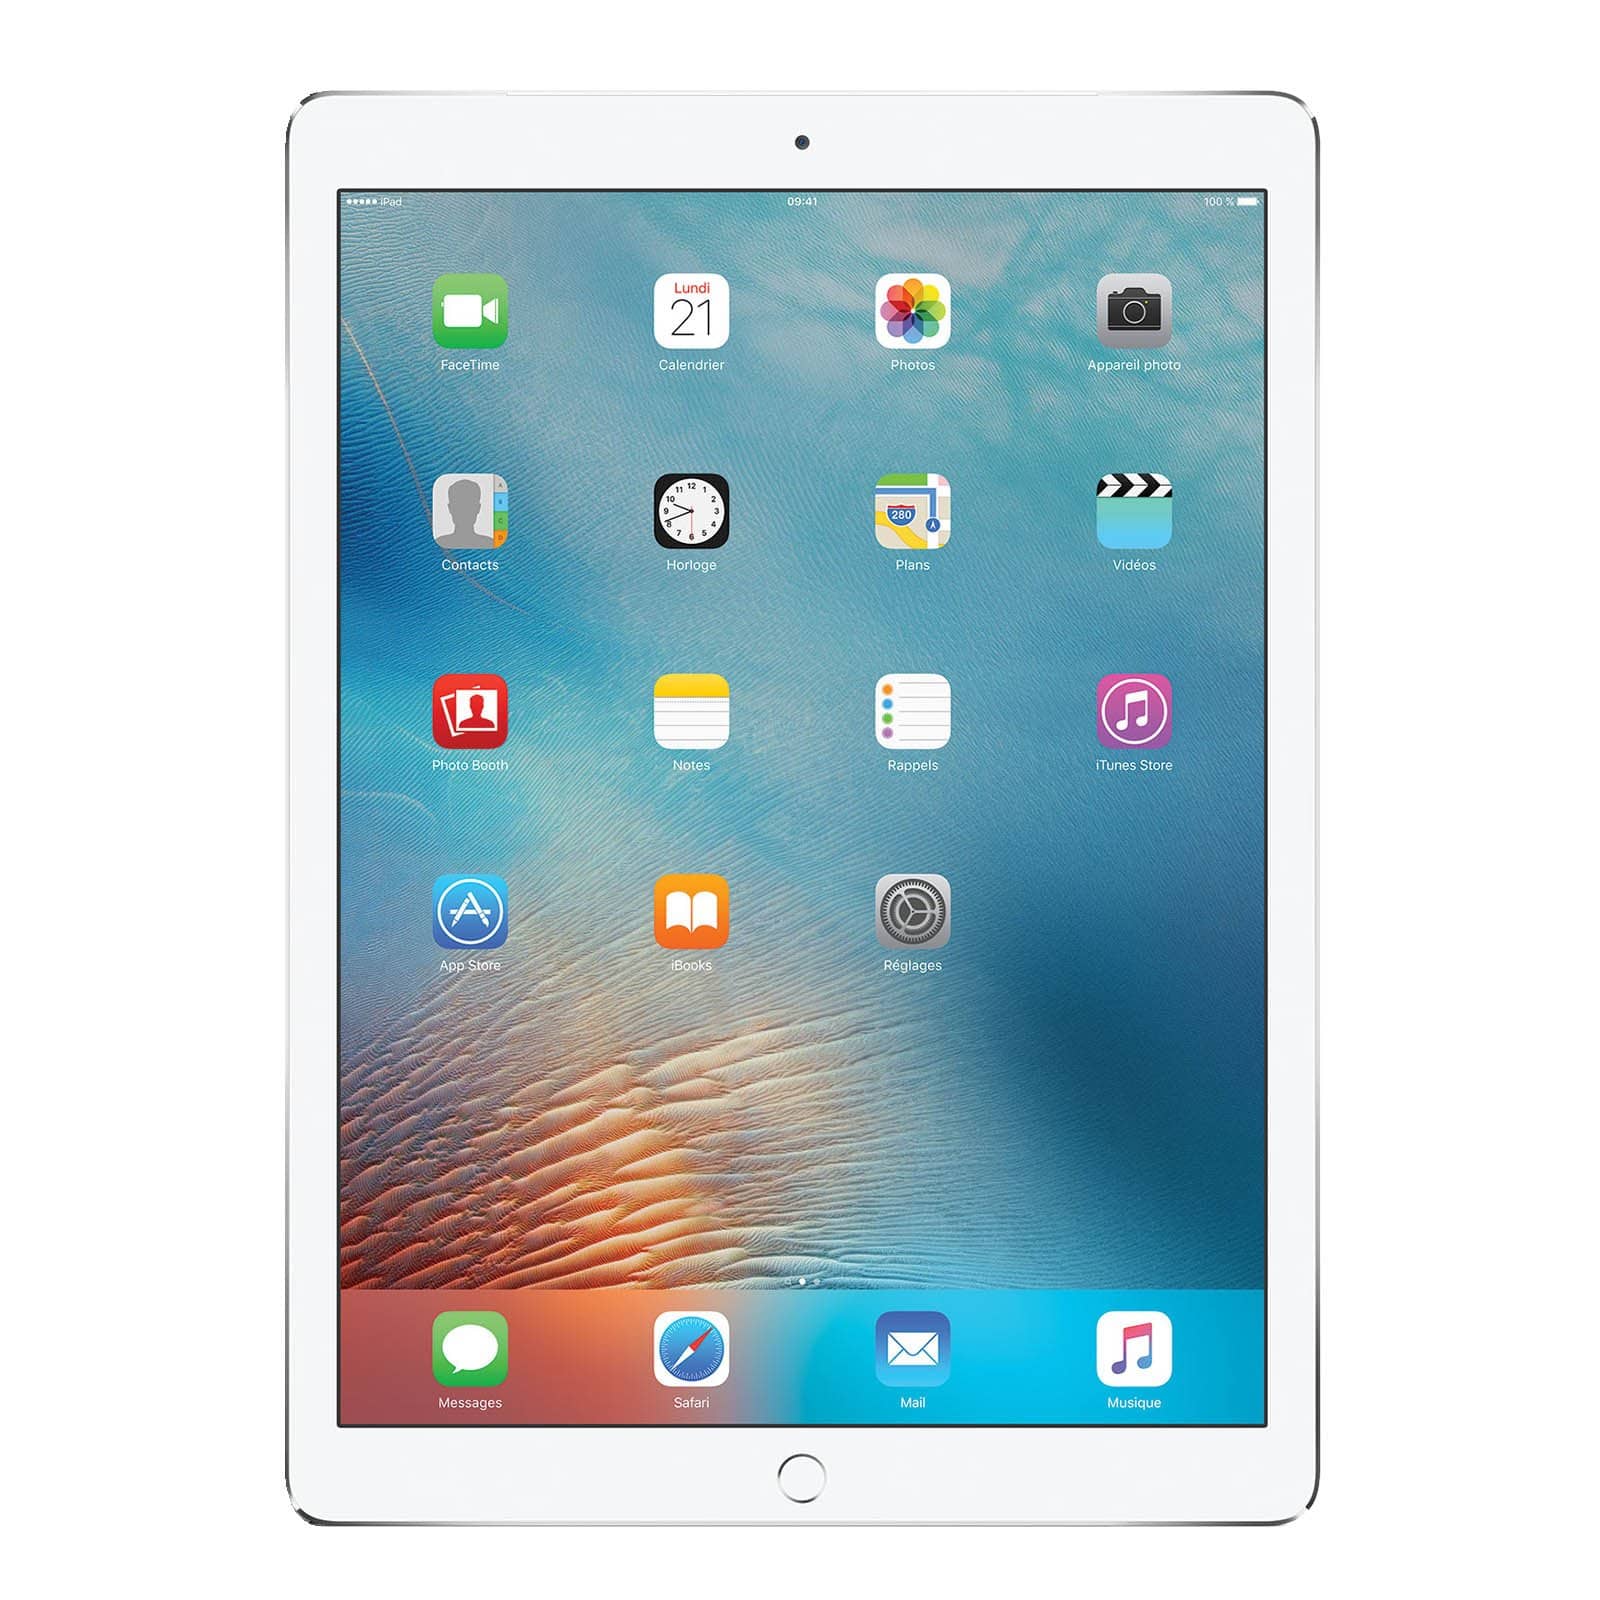 iPad Pro 12.9 Inch 2nd Gen 256GB Silver Very Good - Unlocked